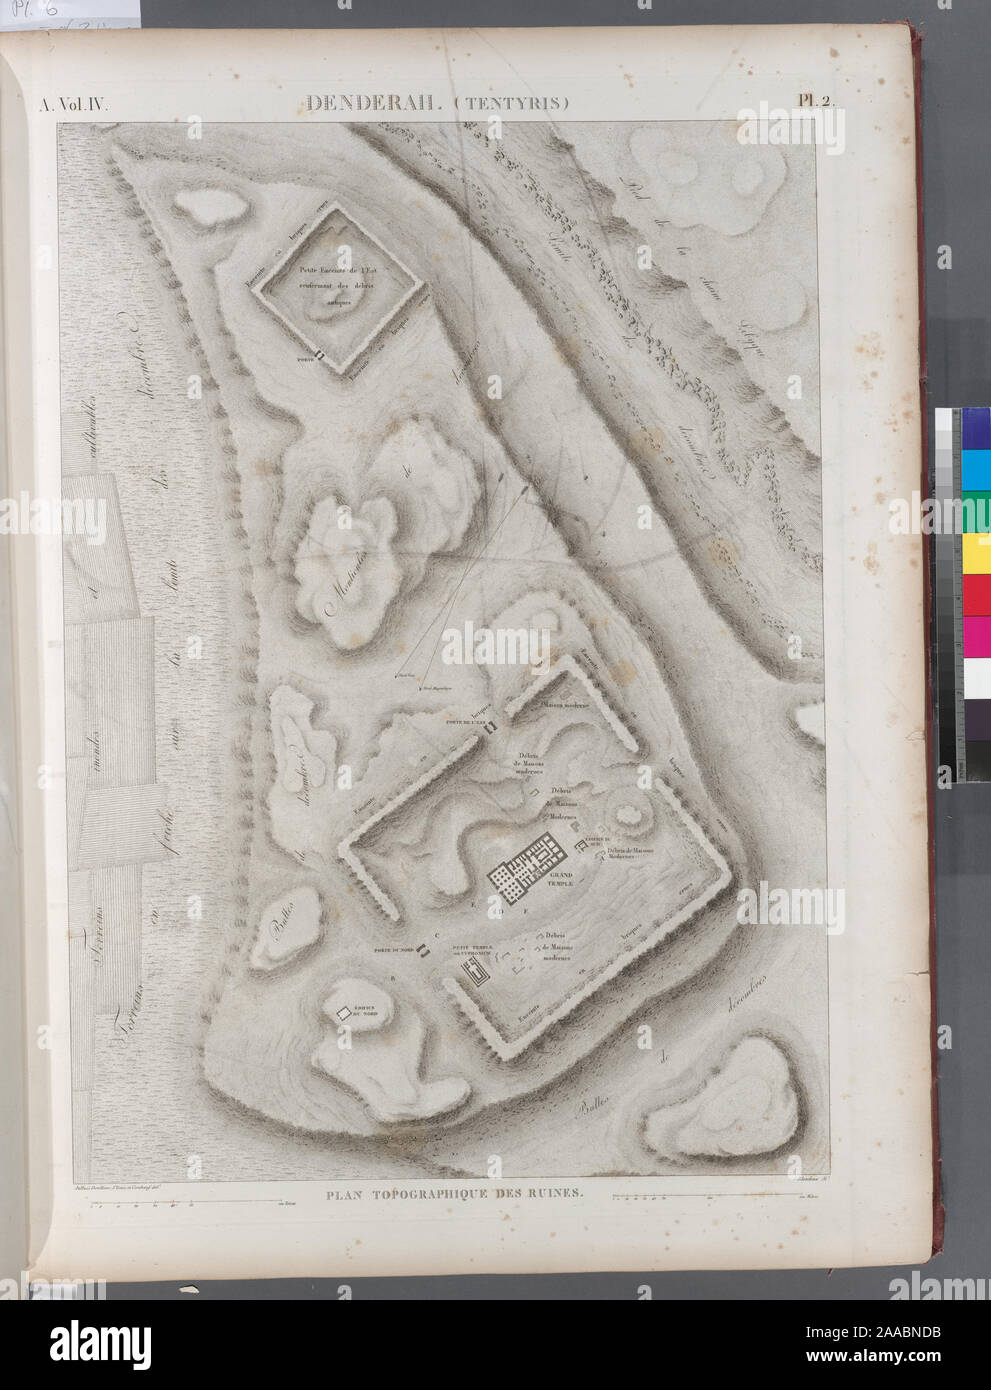 Denderah [Dandara] (Tentyris). Plan topographique des ruines.; Denderah [Dandara] (Tentyris). Plan topographique des ruines. Stock Photo